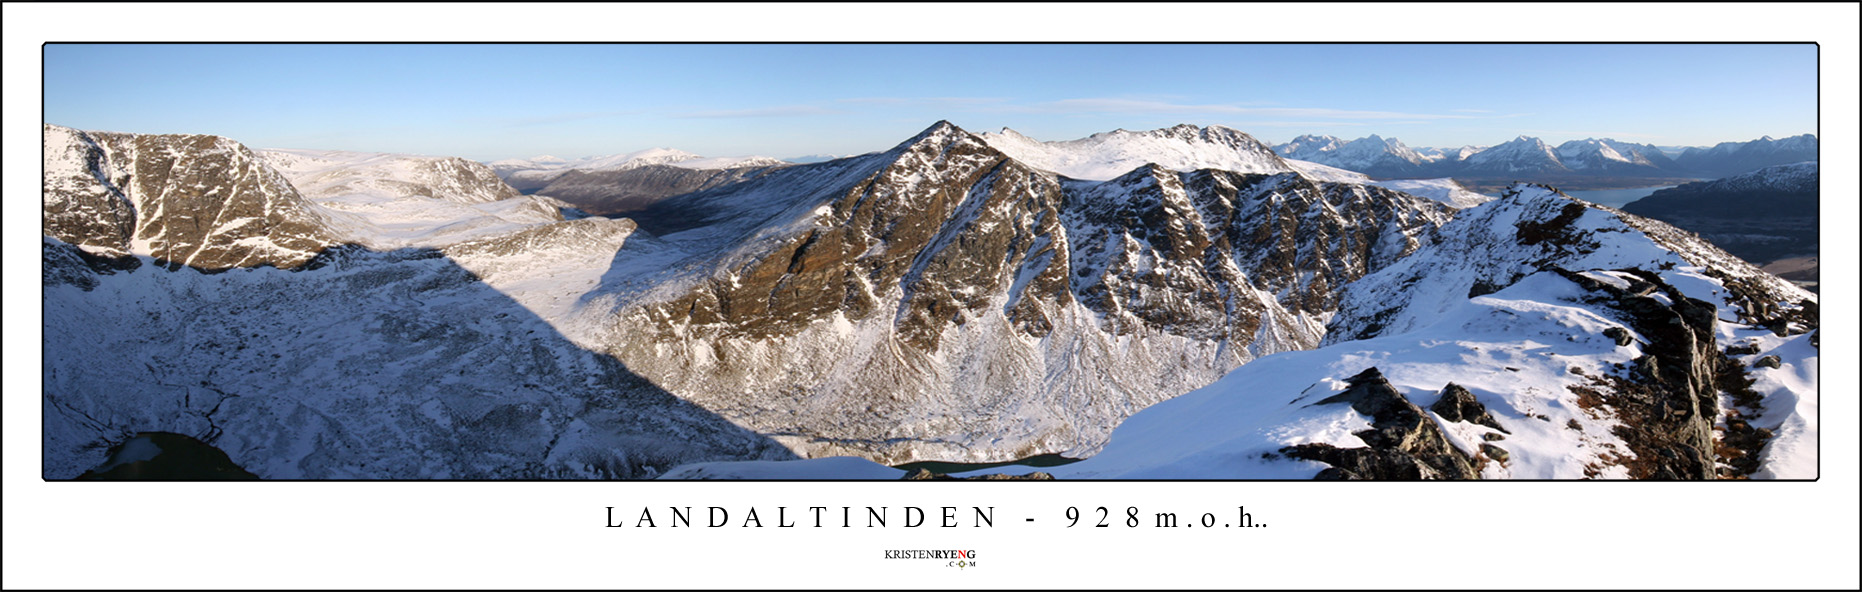 Panorama-Langdaltinden2.jpg - Utsikt fra Langdaltinden (928 moh).